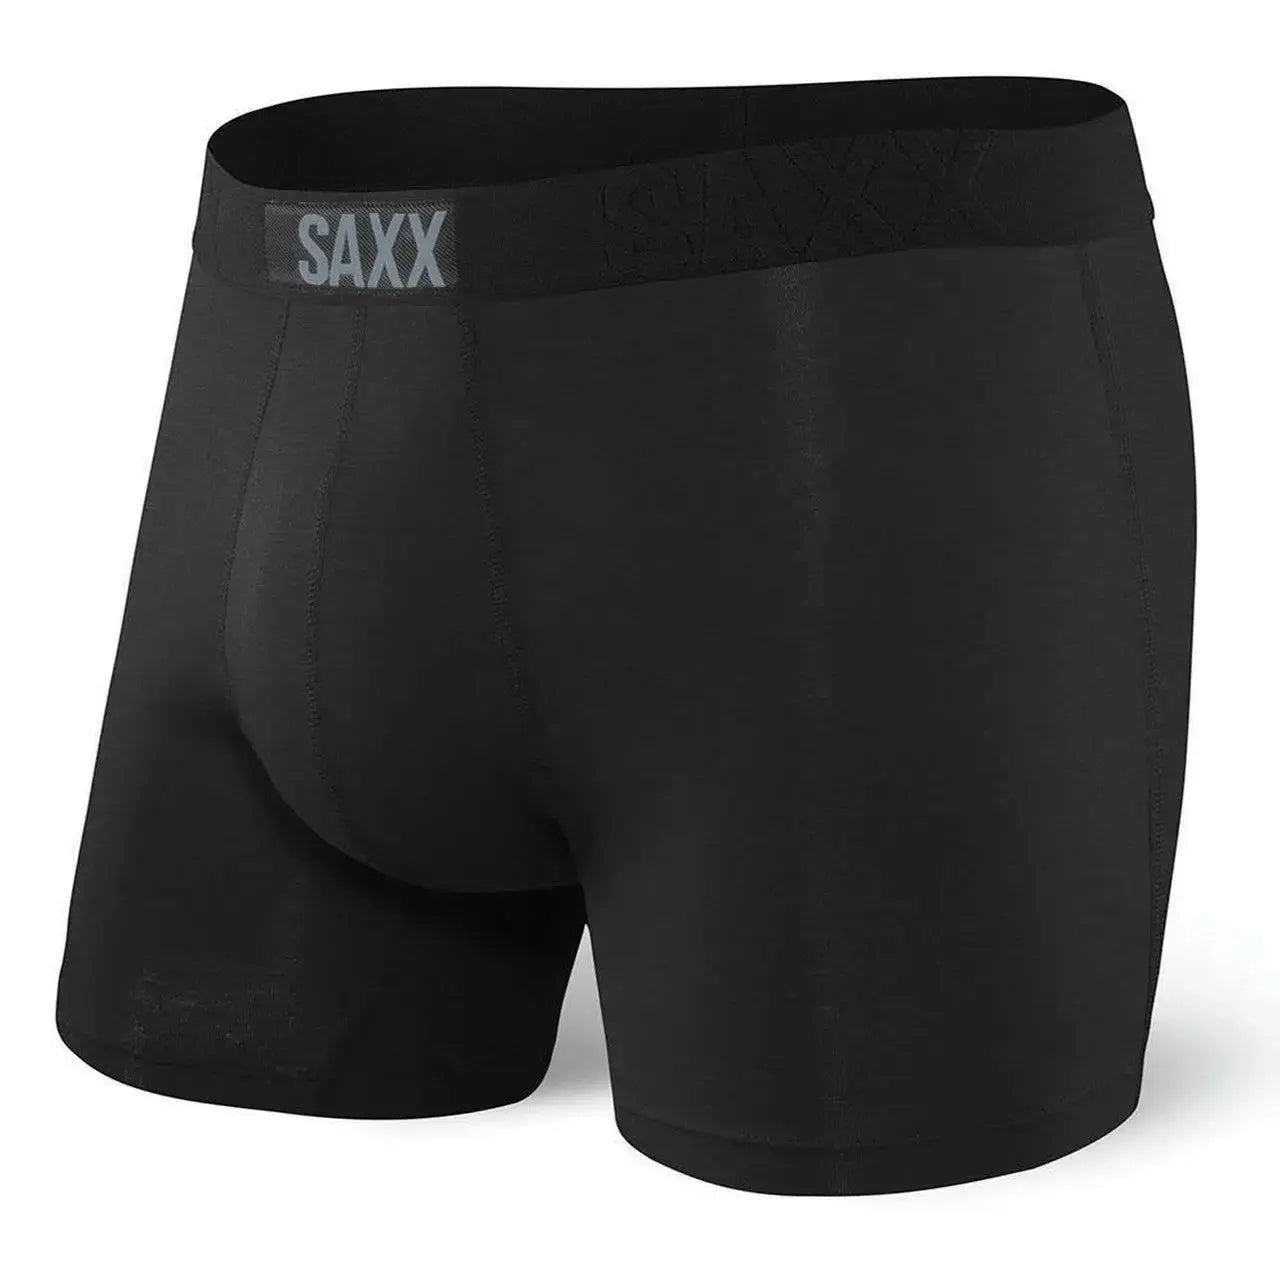 Saxx VIBE Boxer Black Brief | John Bull Clothing